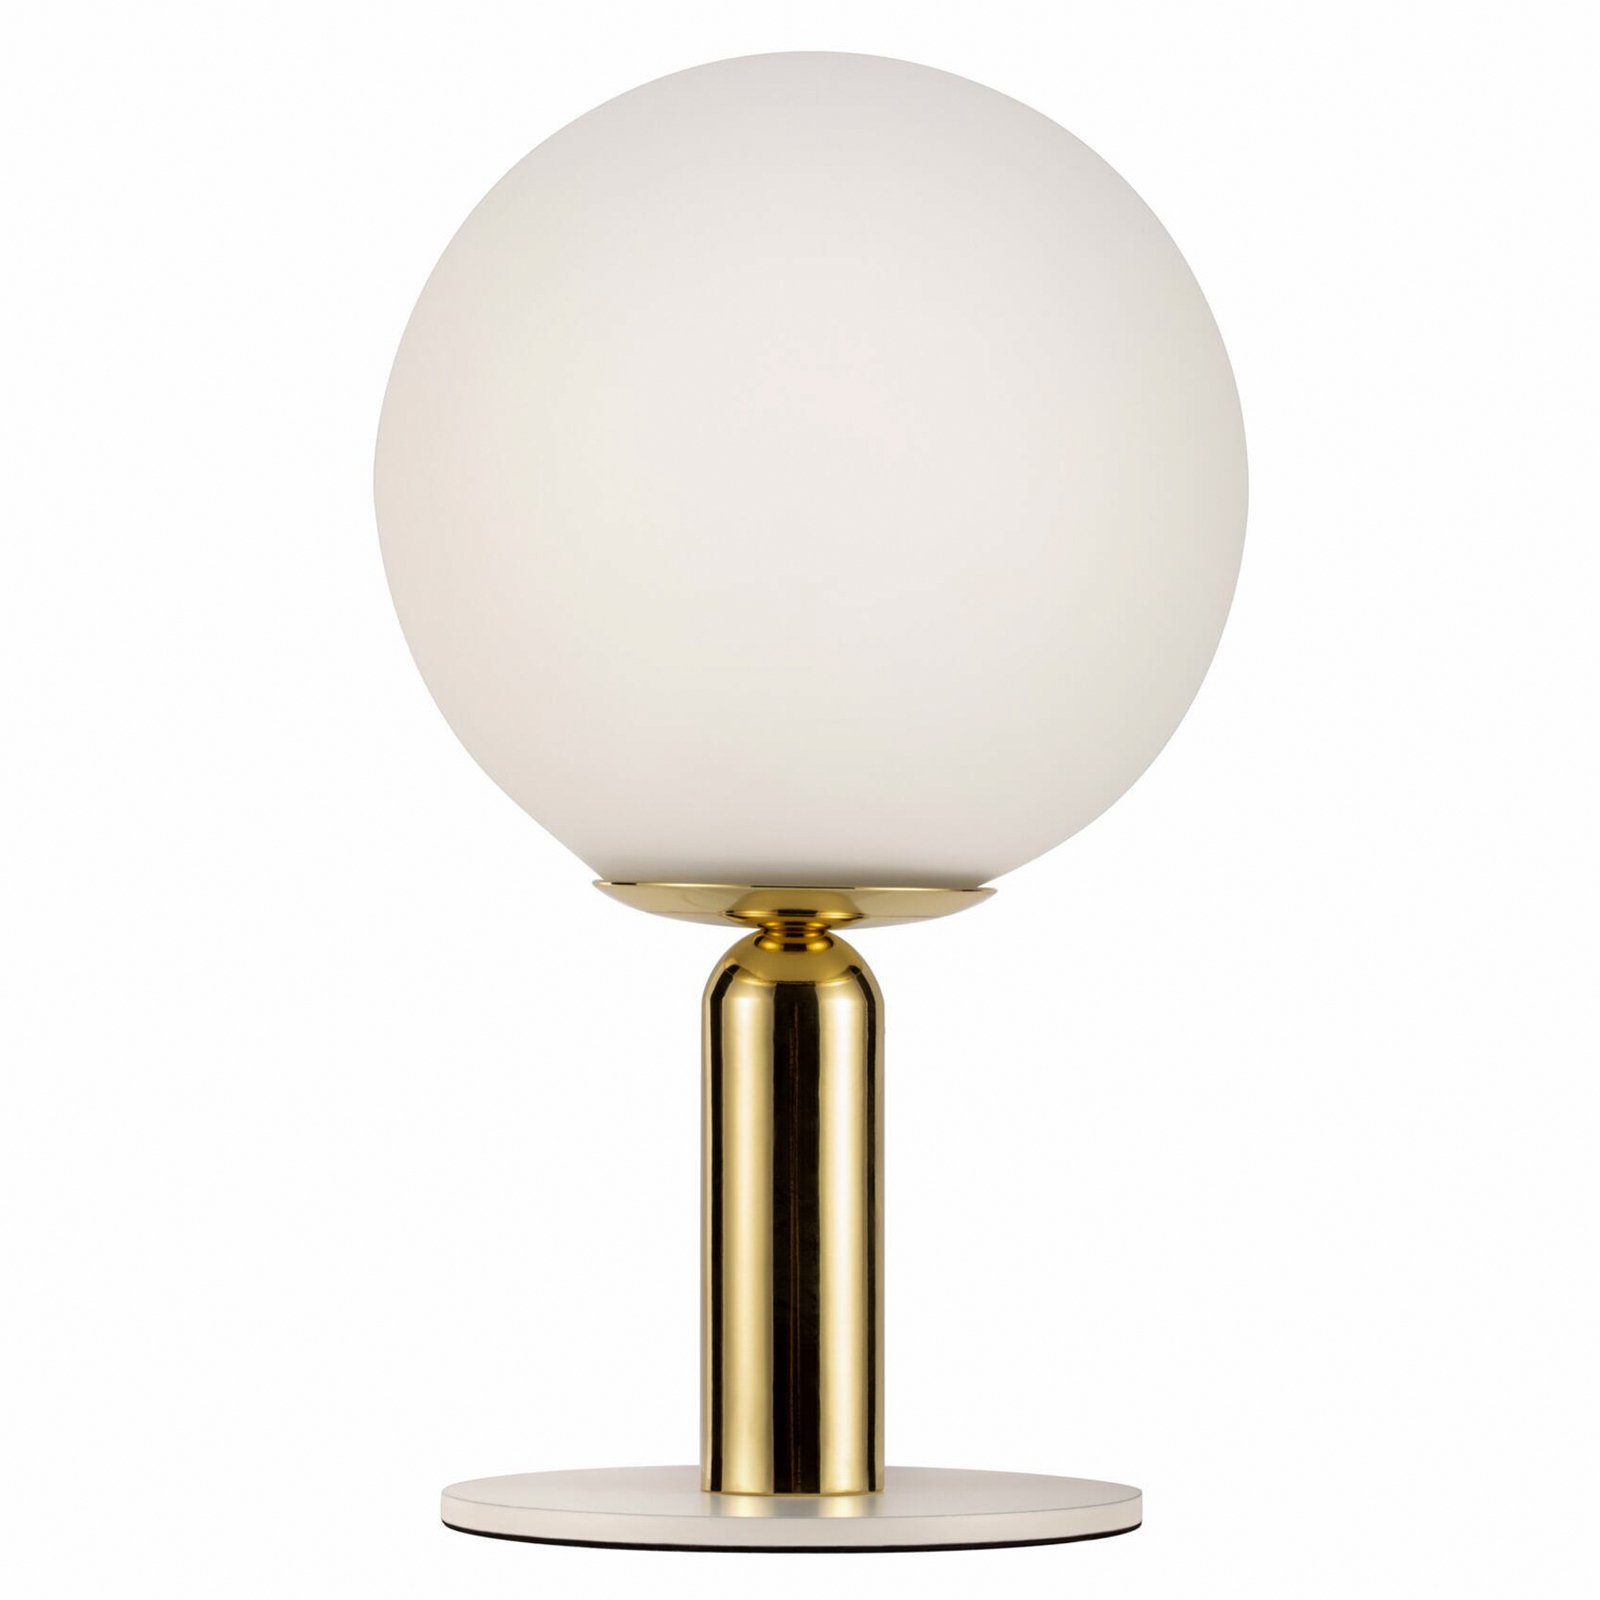 Pauleen Splendid Pearl bordslampa med glaskula